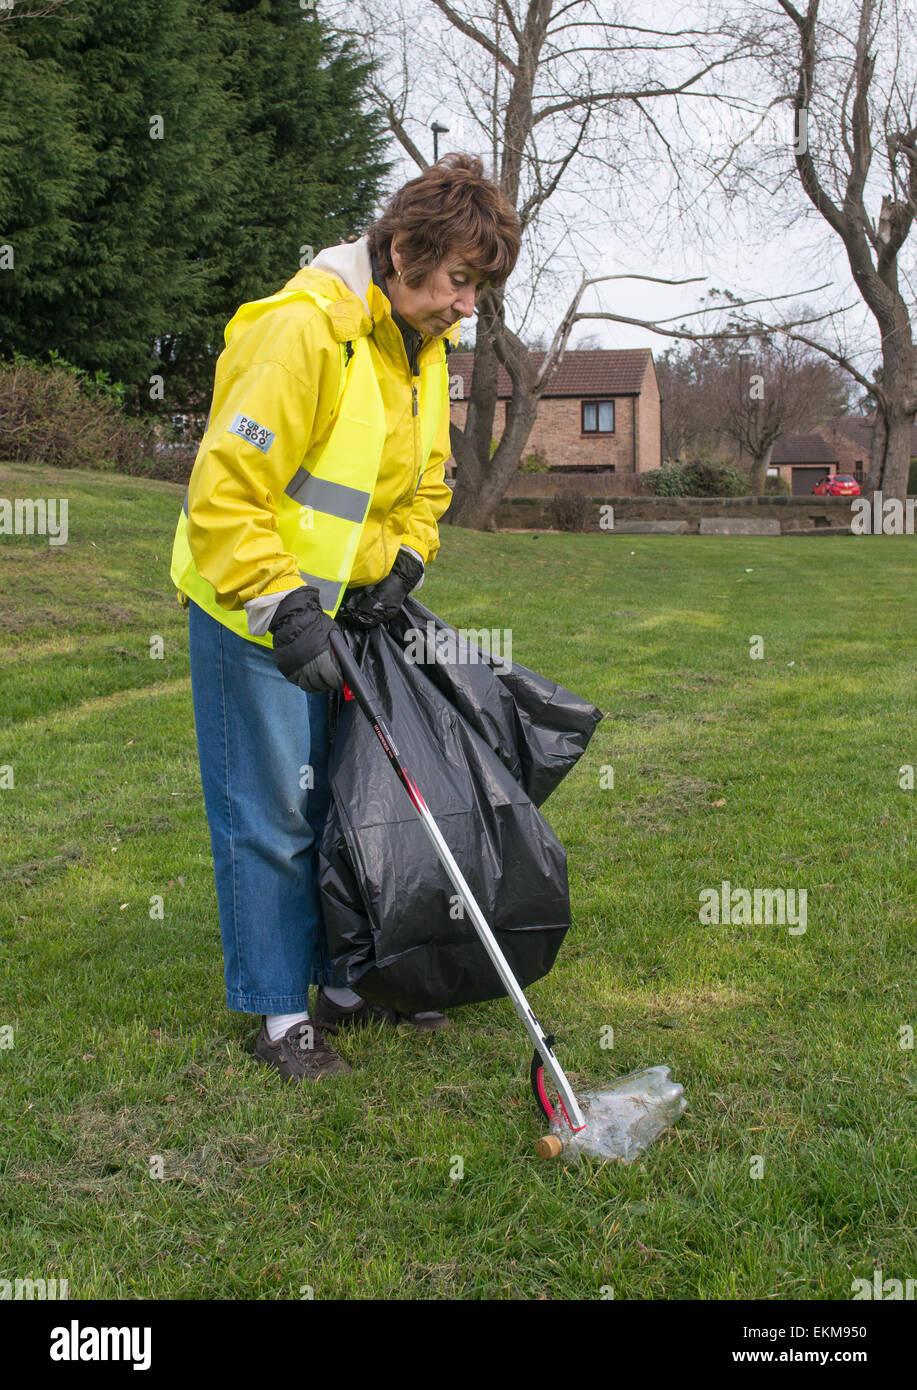 Woman community volunteer litter picker Washington, north east England, UK Stock Photo